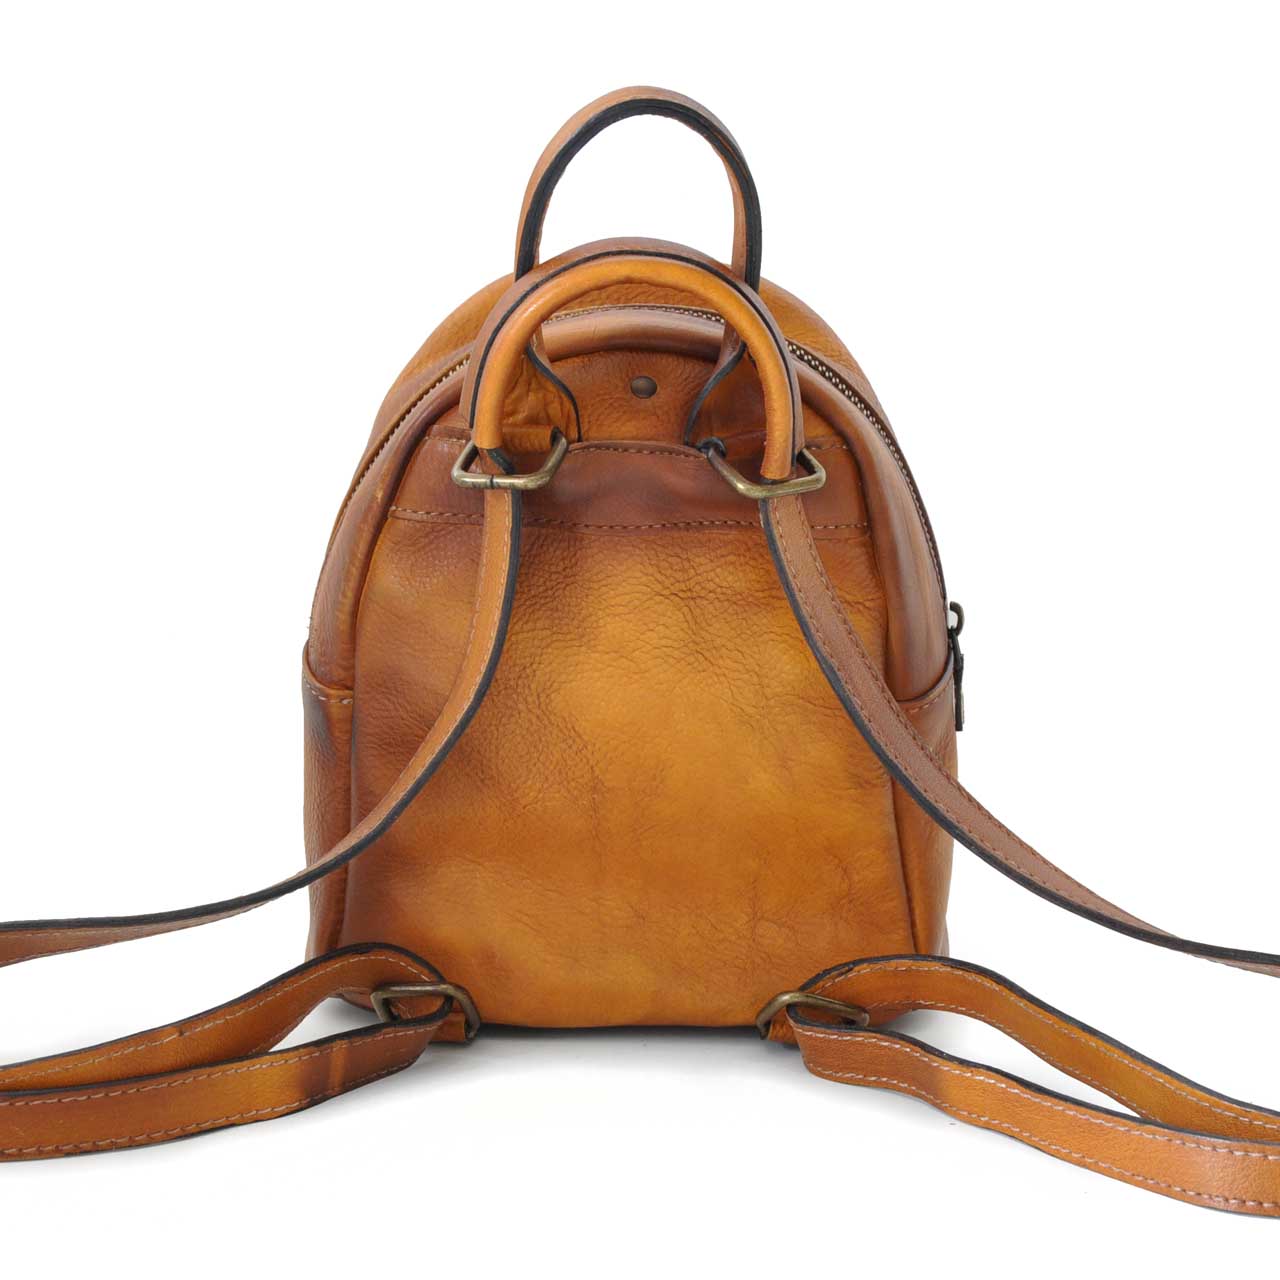 Pratesi Montegiovi Backpack in genuine Italian leather